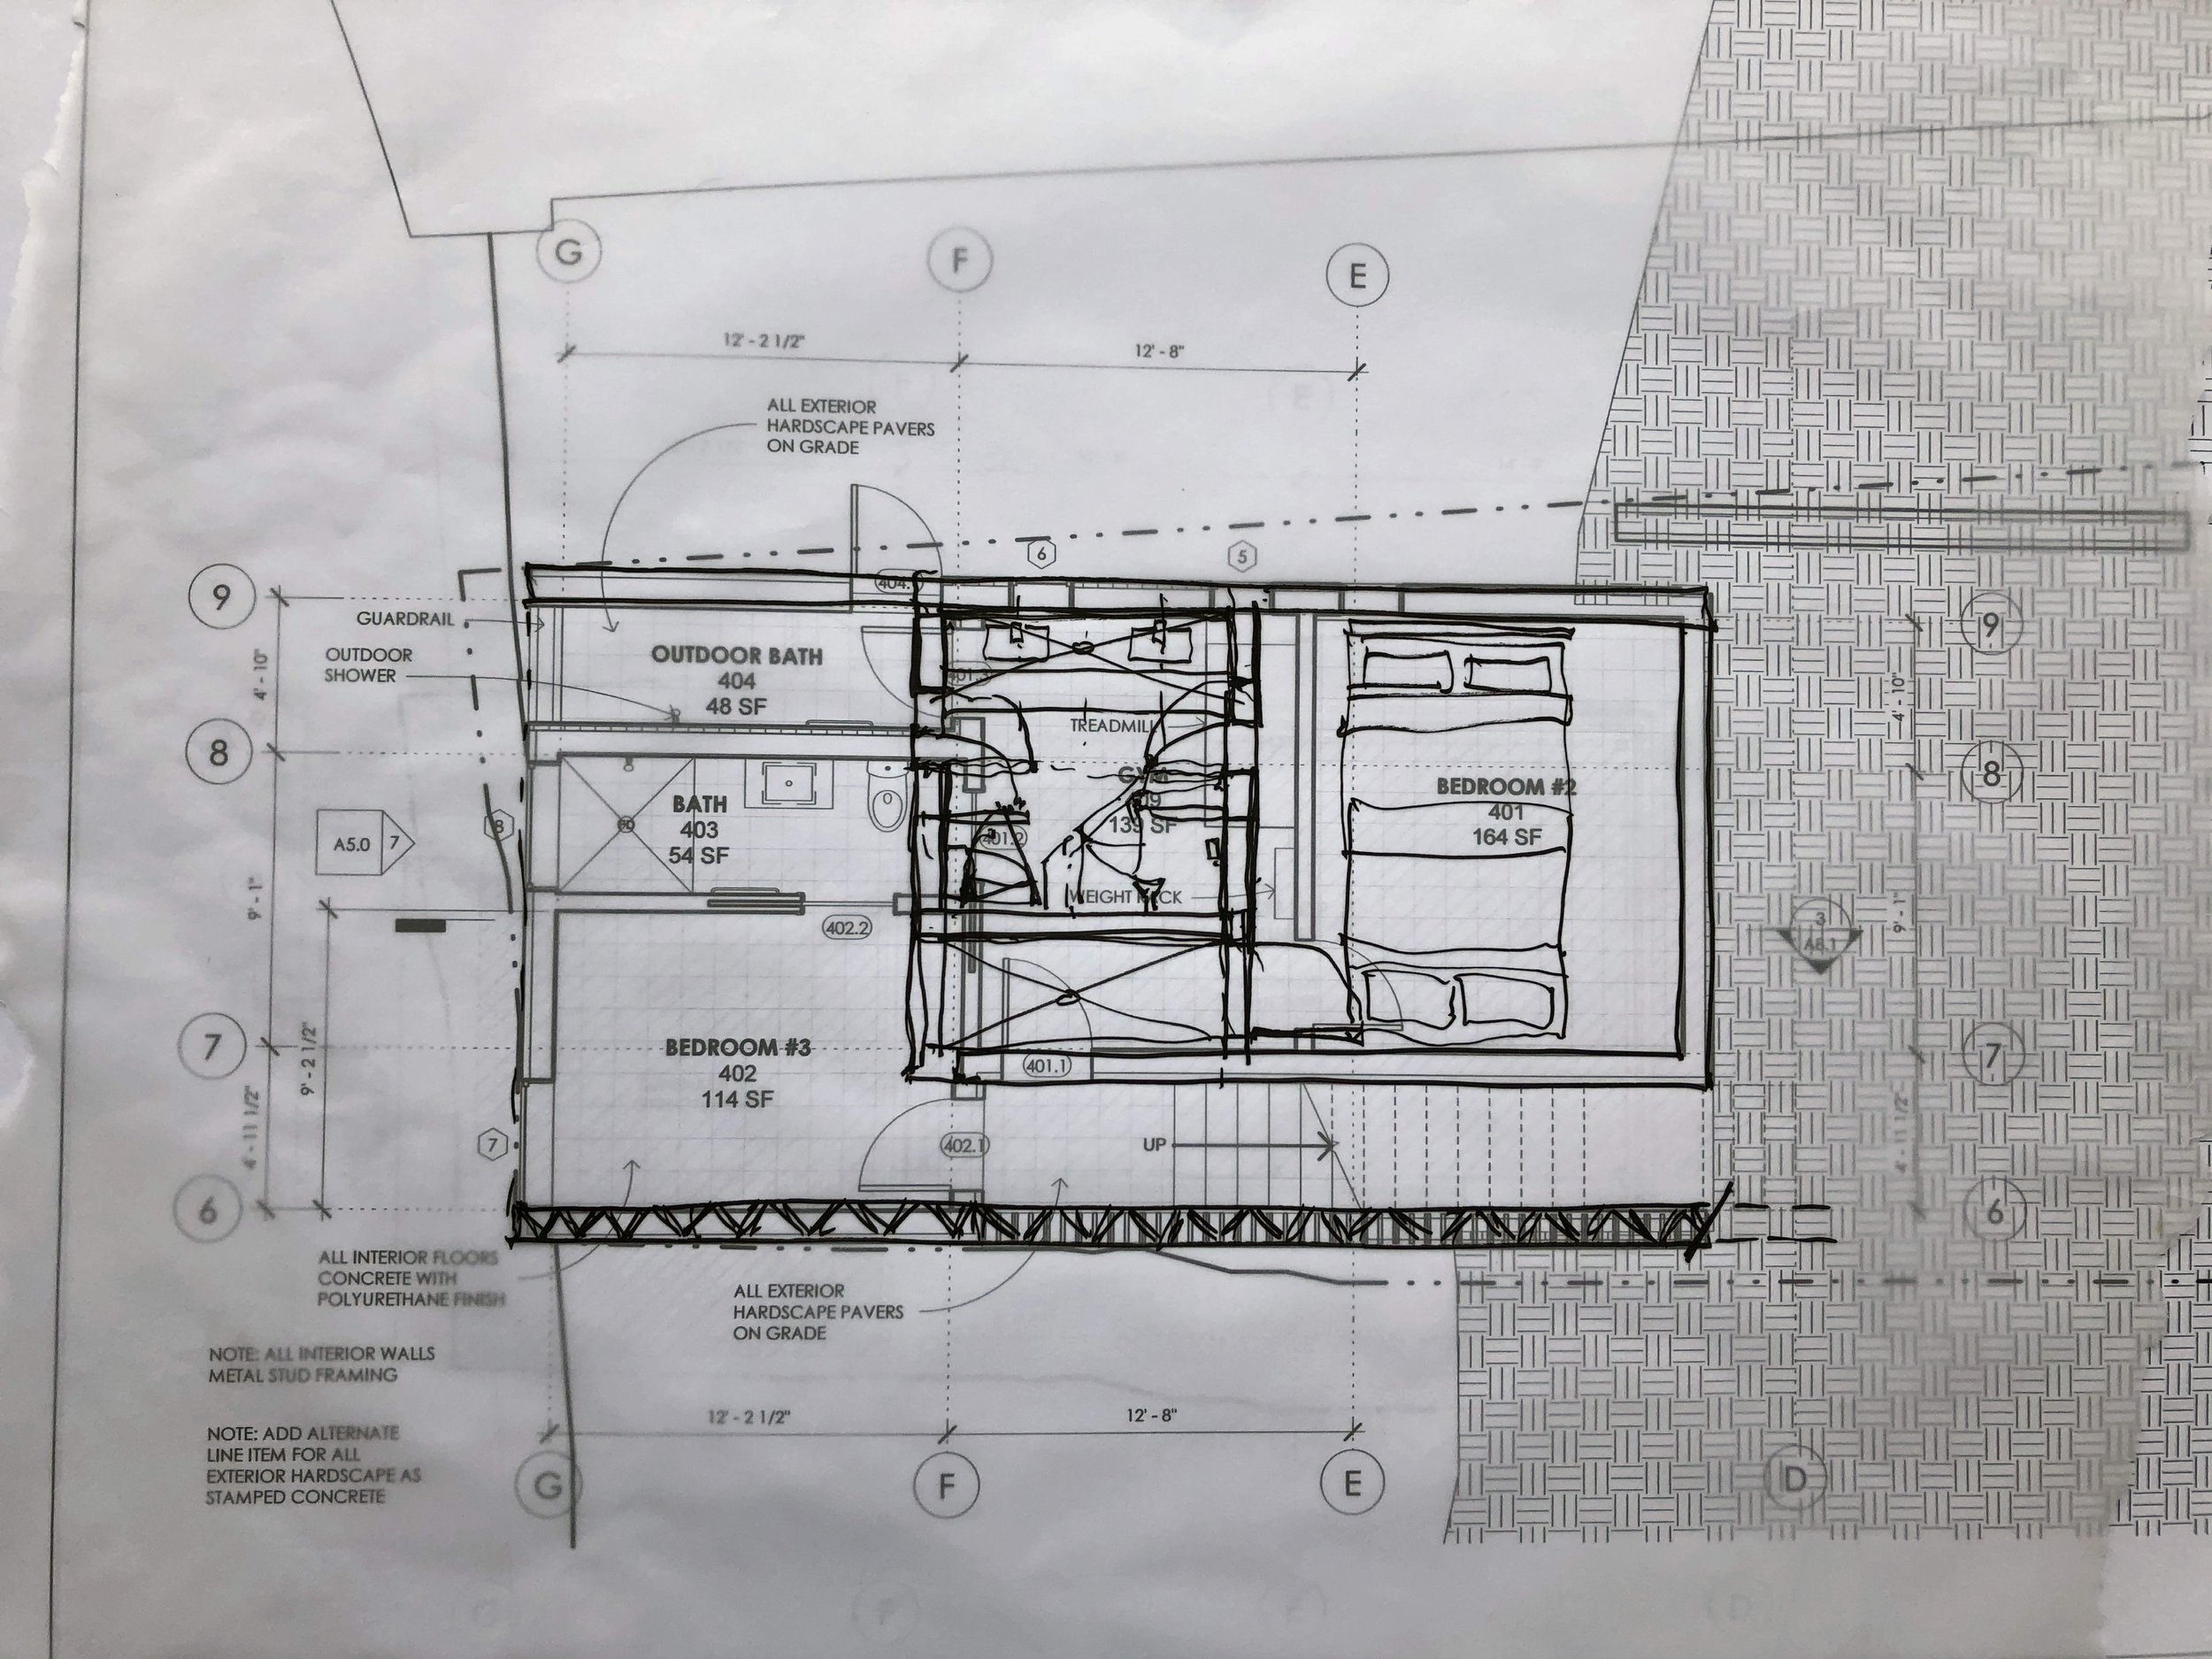 21 0415 Floor Plan Sketches Page 003-min.jpg